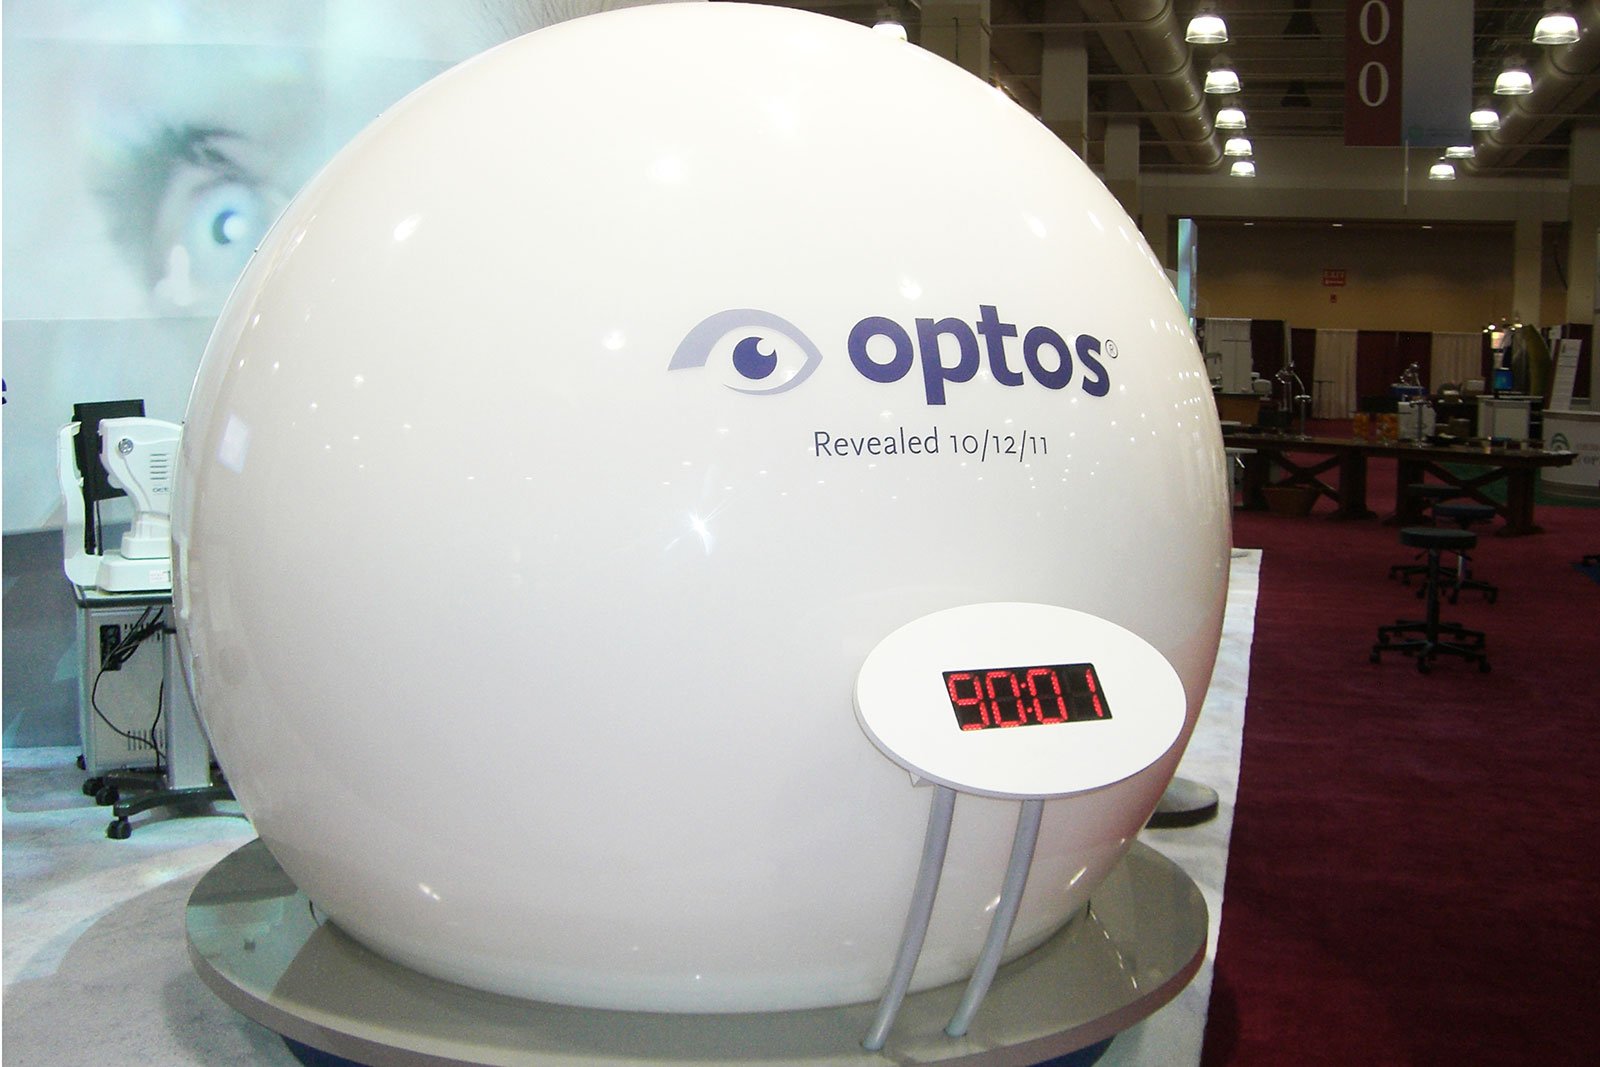 Optos product reveal globe